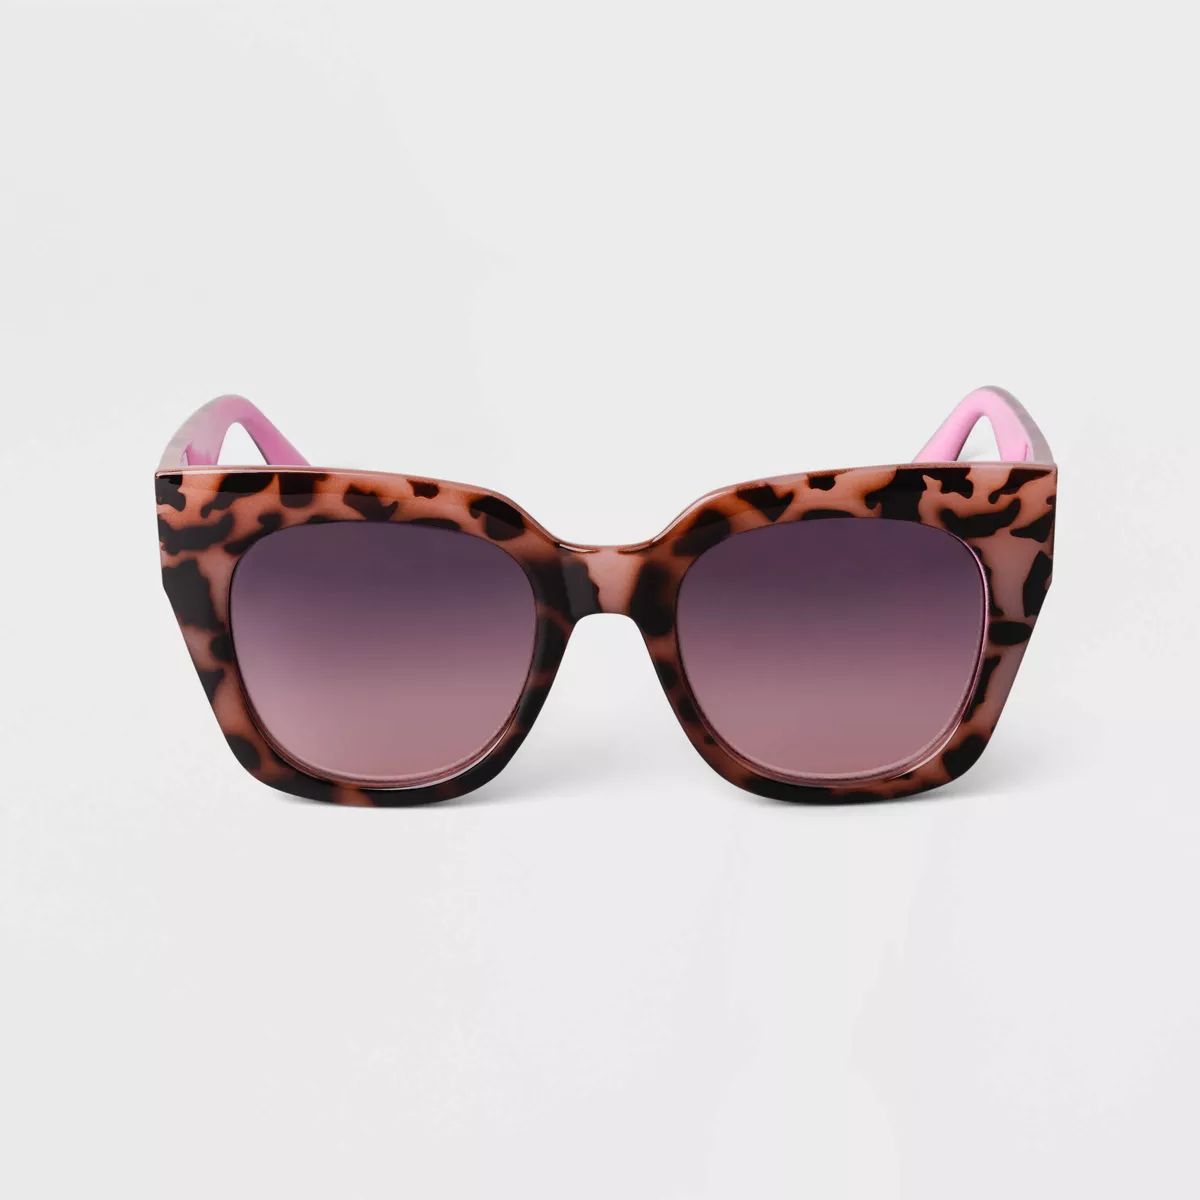 Women's Oversized Two-Tone Tortoise Shell Cateye Sunglasses - A New Day™ Tan | Target